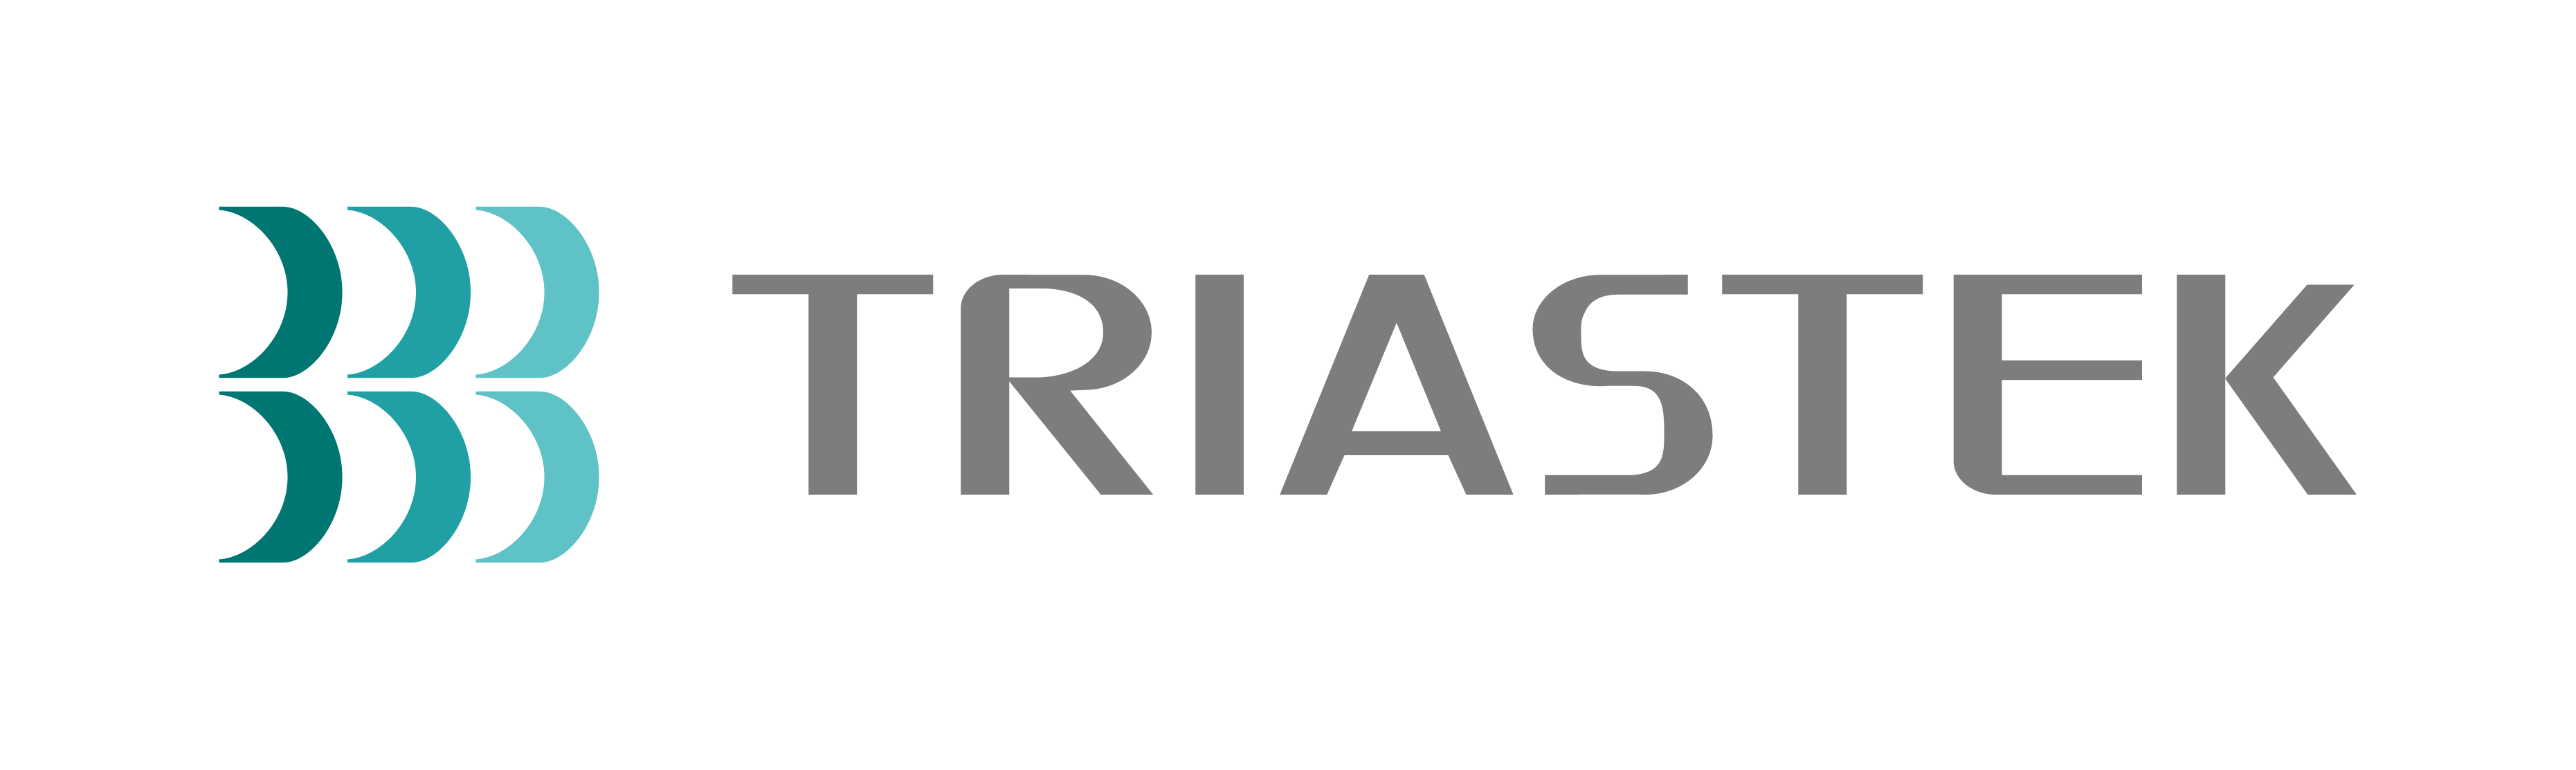 Triastek logo